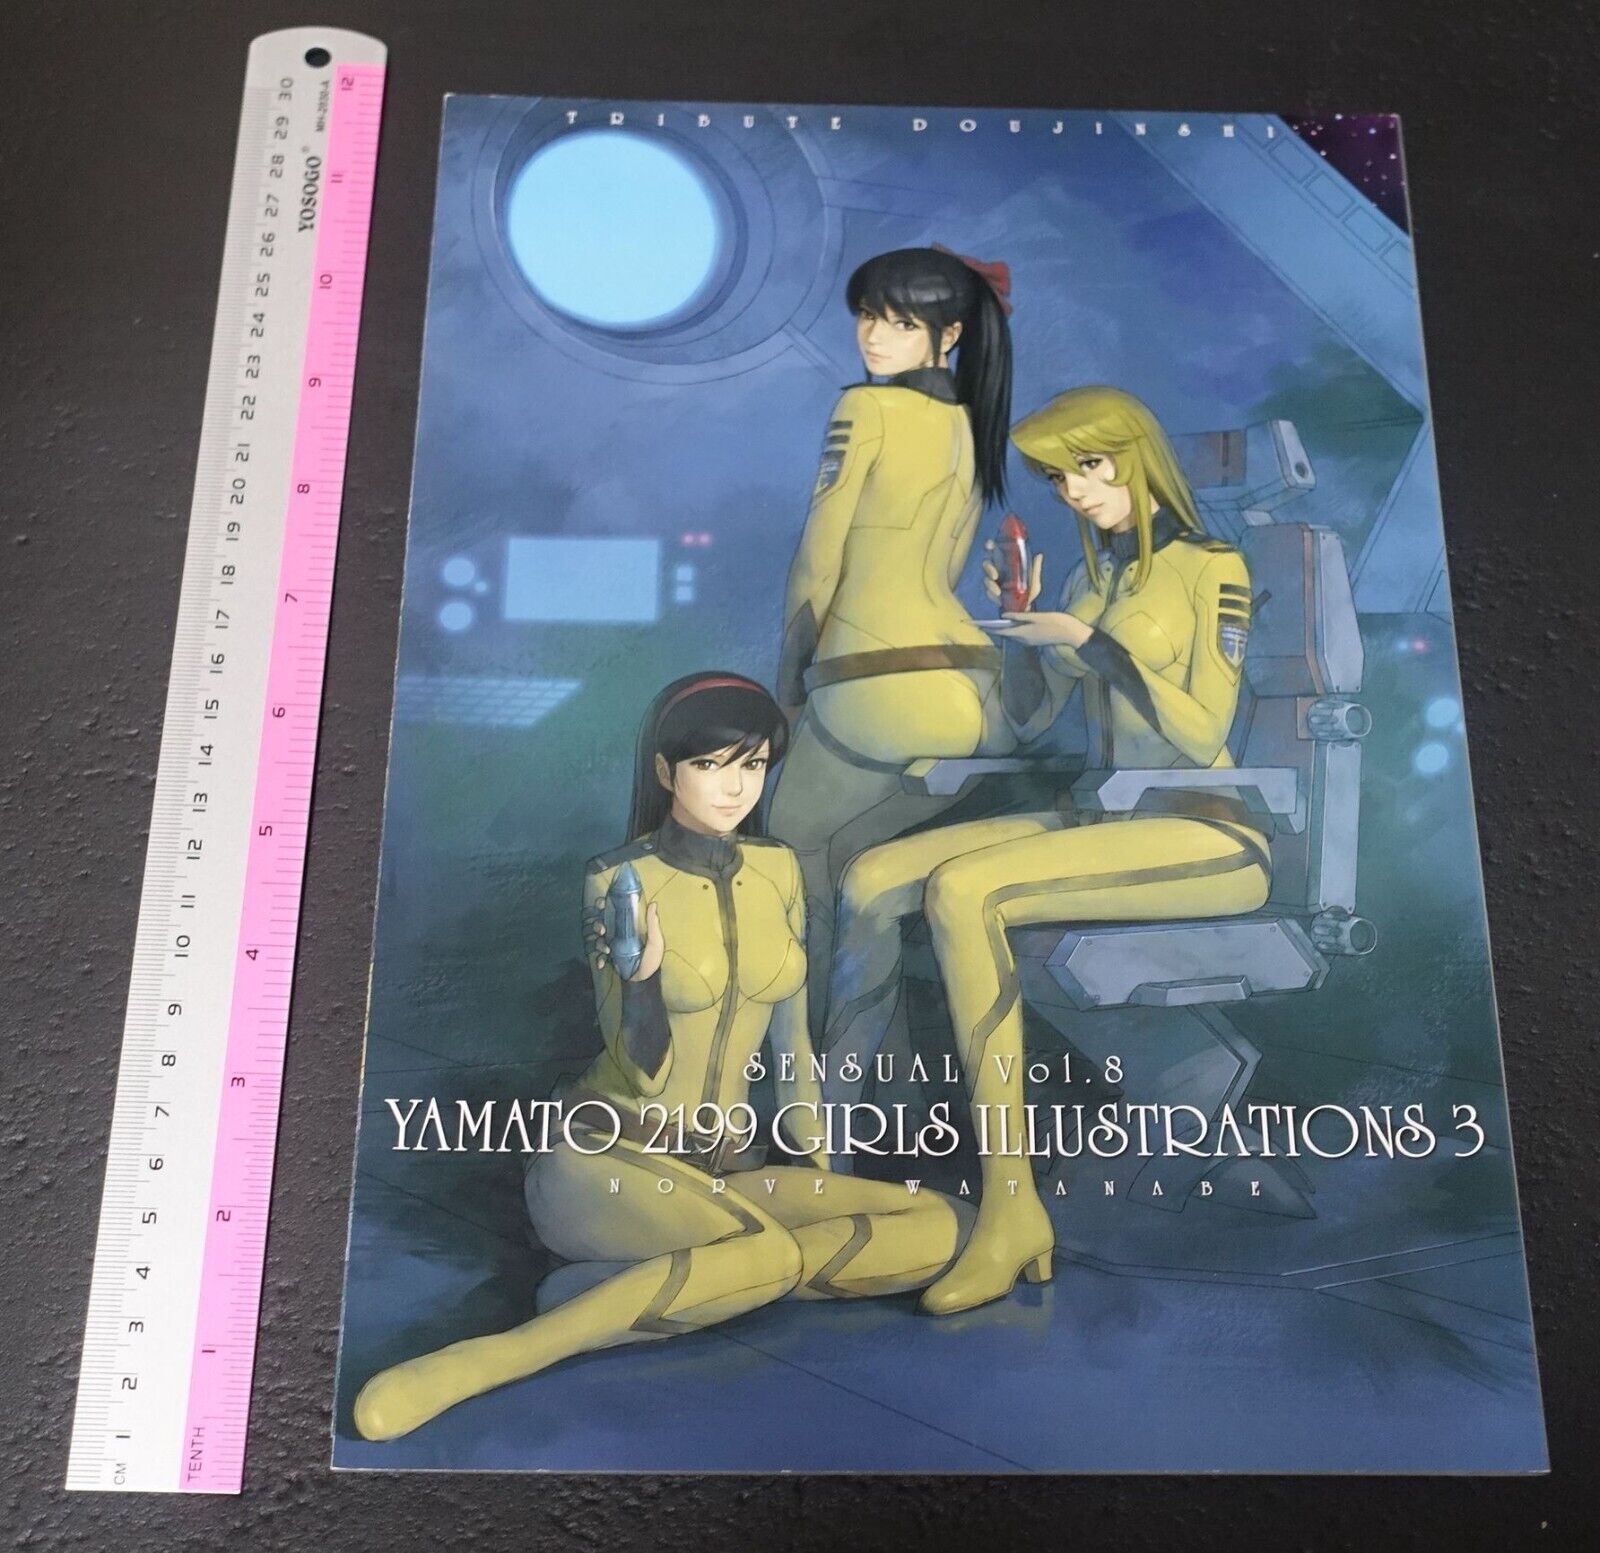 Castlism STAR BLAZERS Fan Art Book YAMATO 2199 GIRLS ILLUSTRATIONS 3 